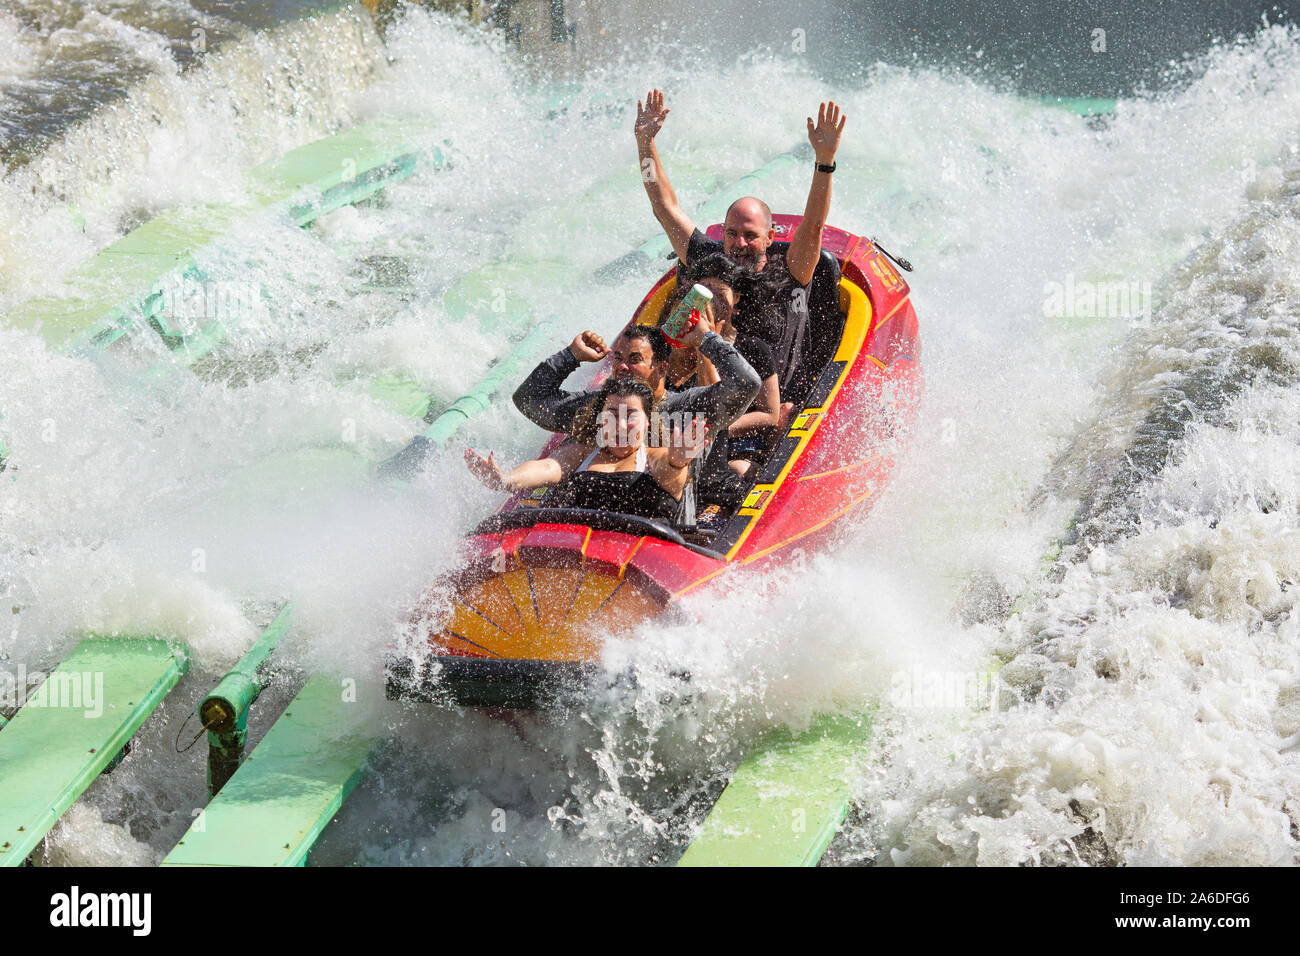 Dudley's Ripsaw DoRight cae agua Ride, Islas de la aventura, Universal Studios Resort, Orlando, Florida Foto de stock